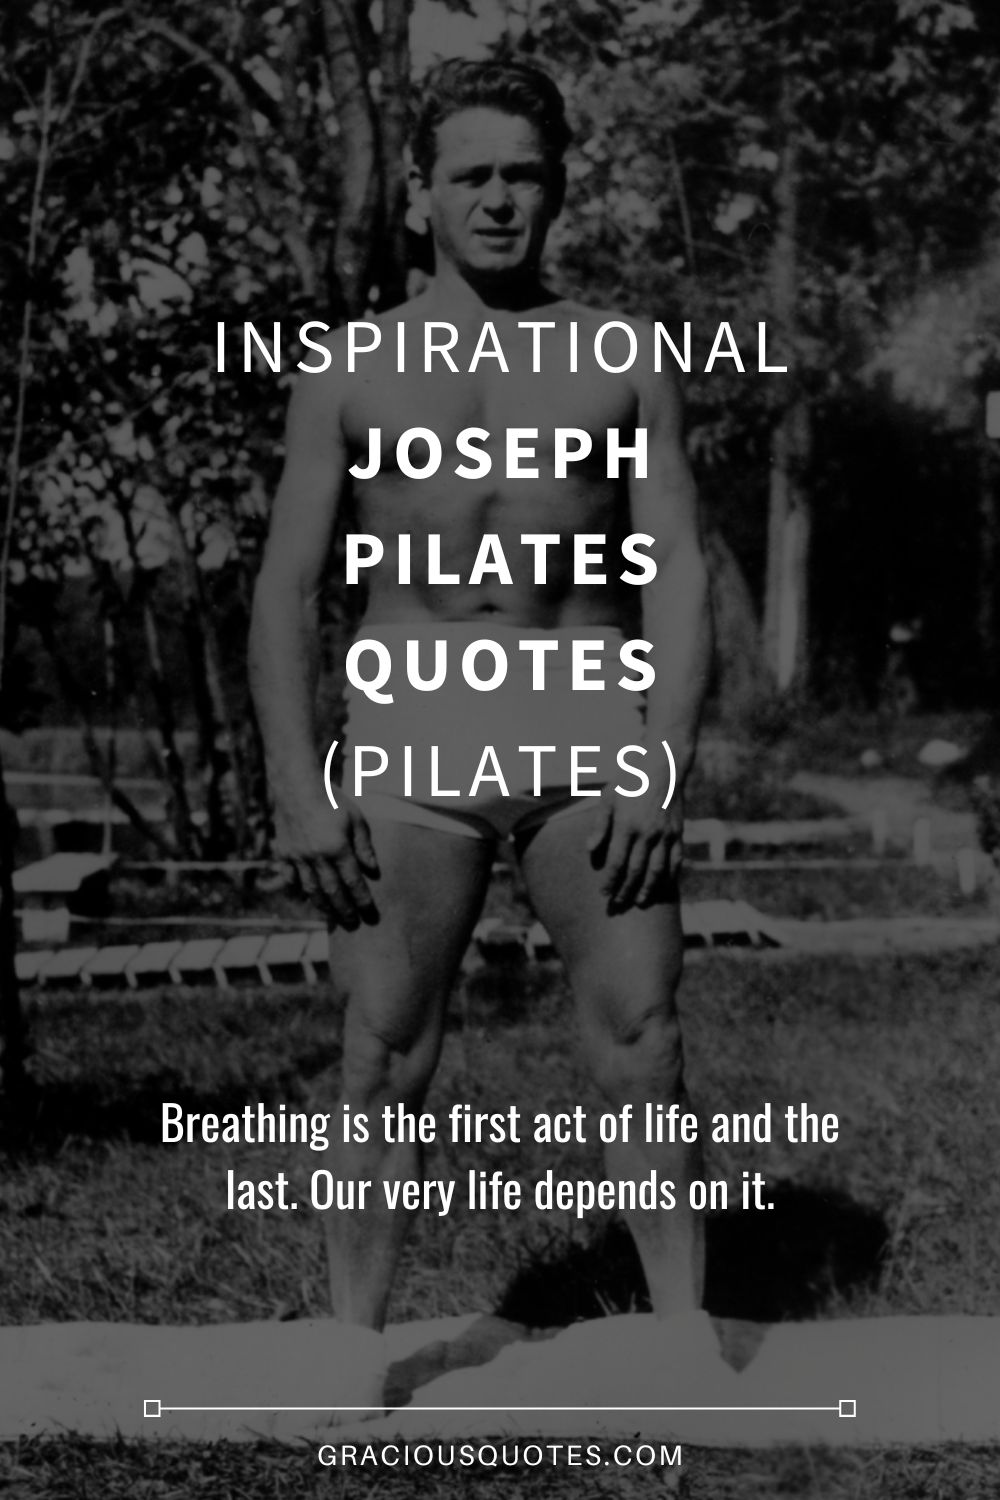 Inspirational Joseph Pilates Quotes (PILATES) - Gracious Quotes